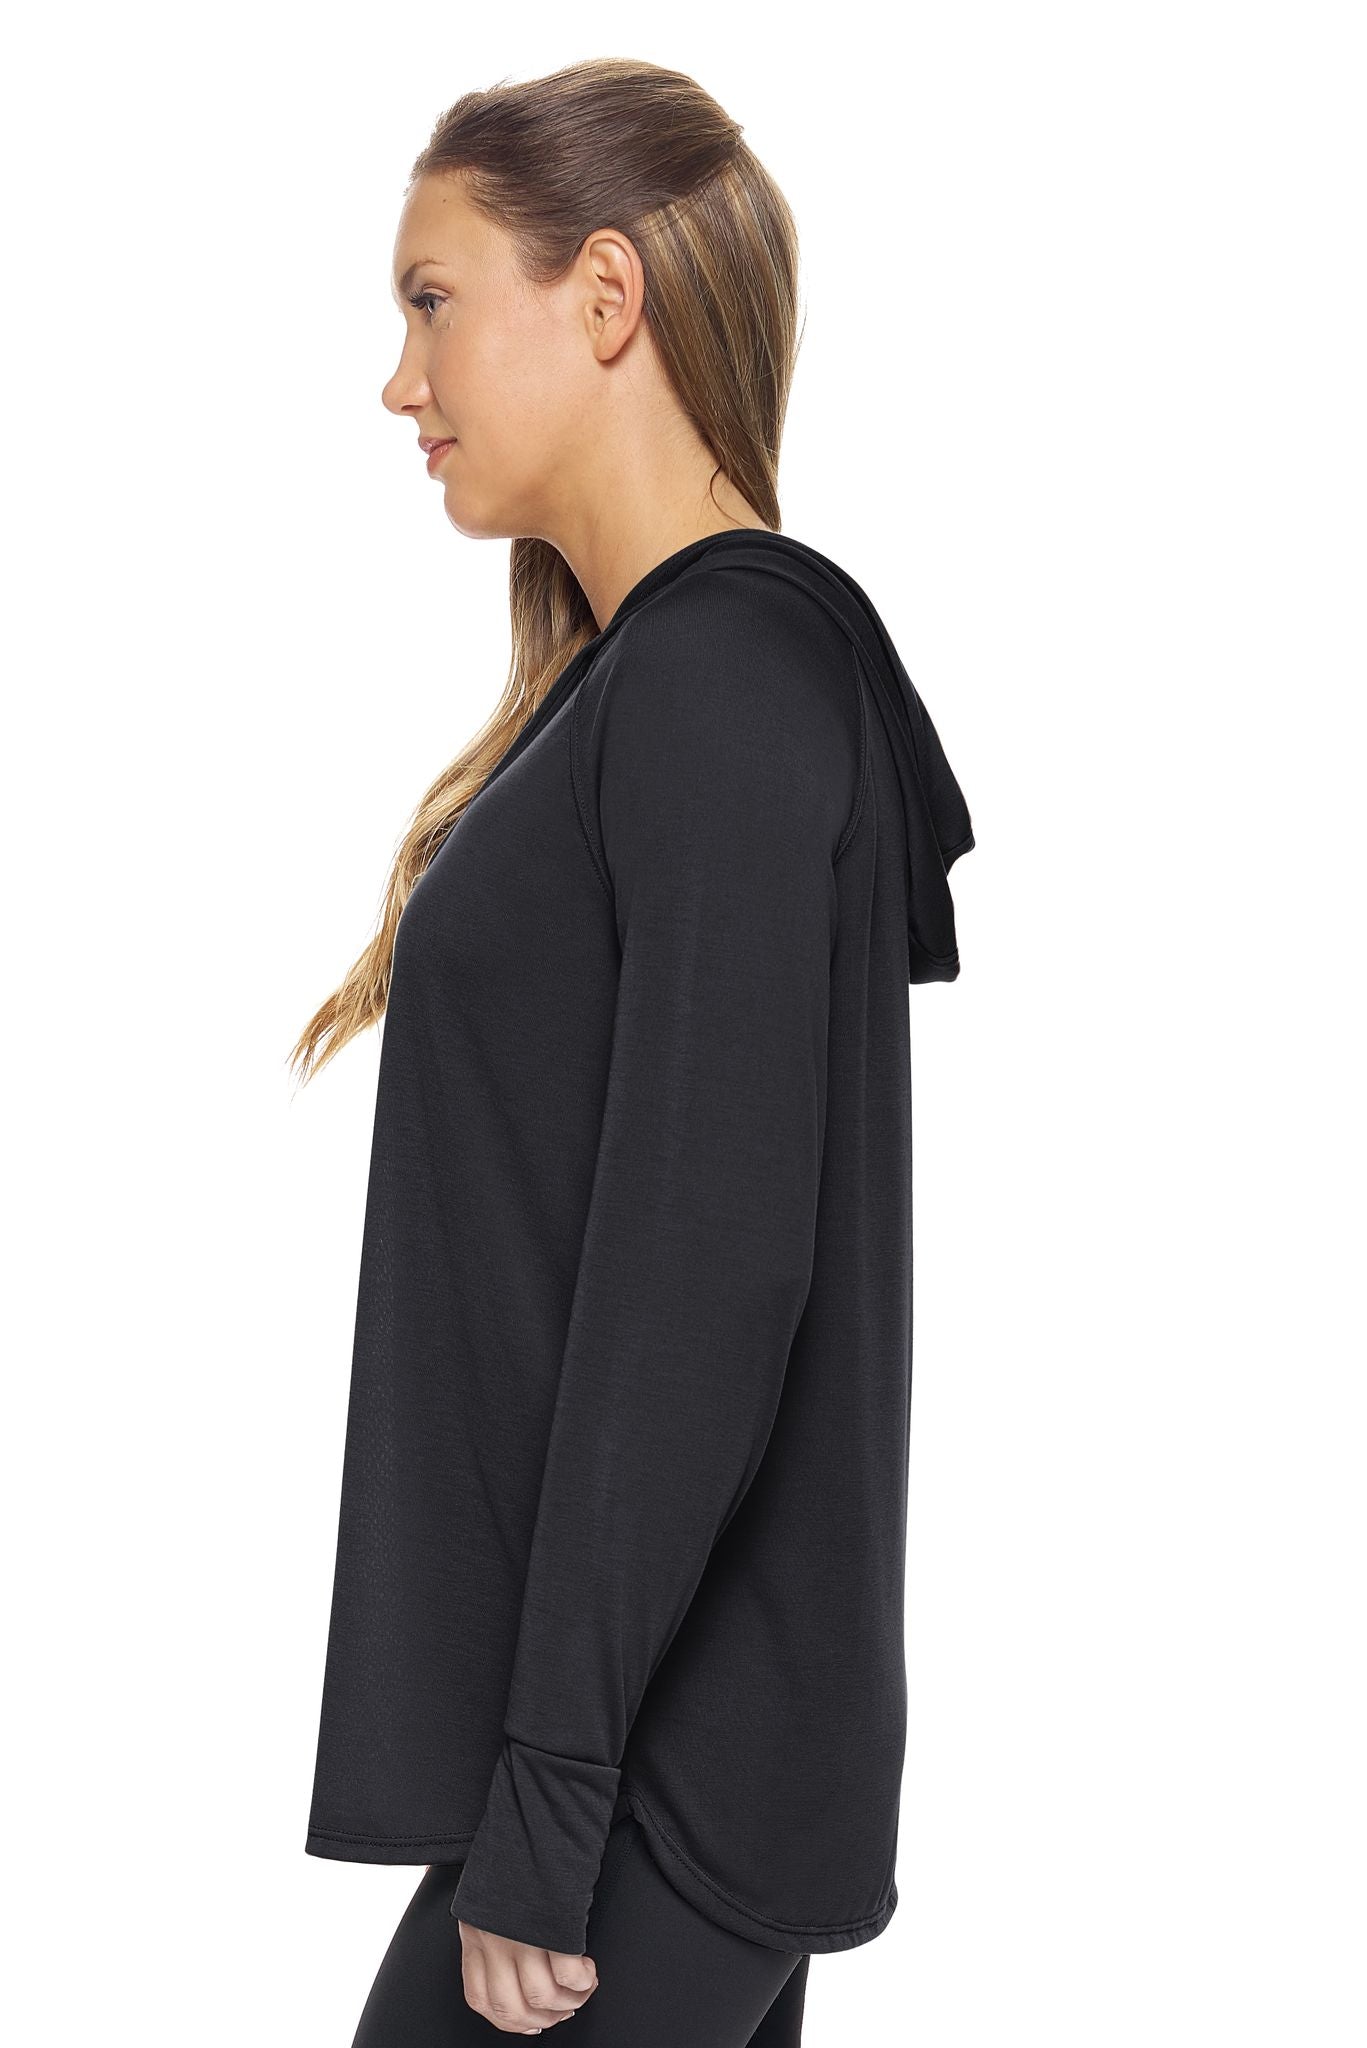 Expert Brand Retail Super Soft Eco-Friendly Performance Apparel Fashion Sportswear Women's Hoodie Long Sleeve Shirt Made in USA black 2#color_black